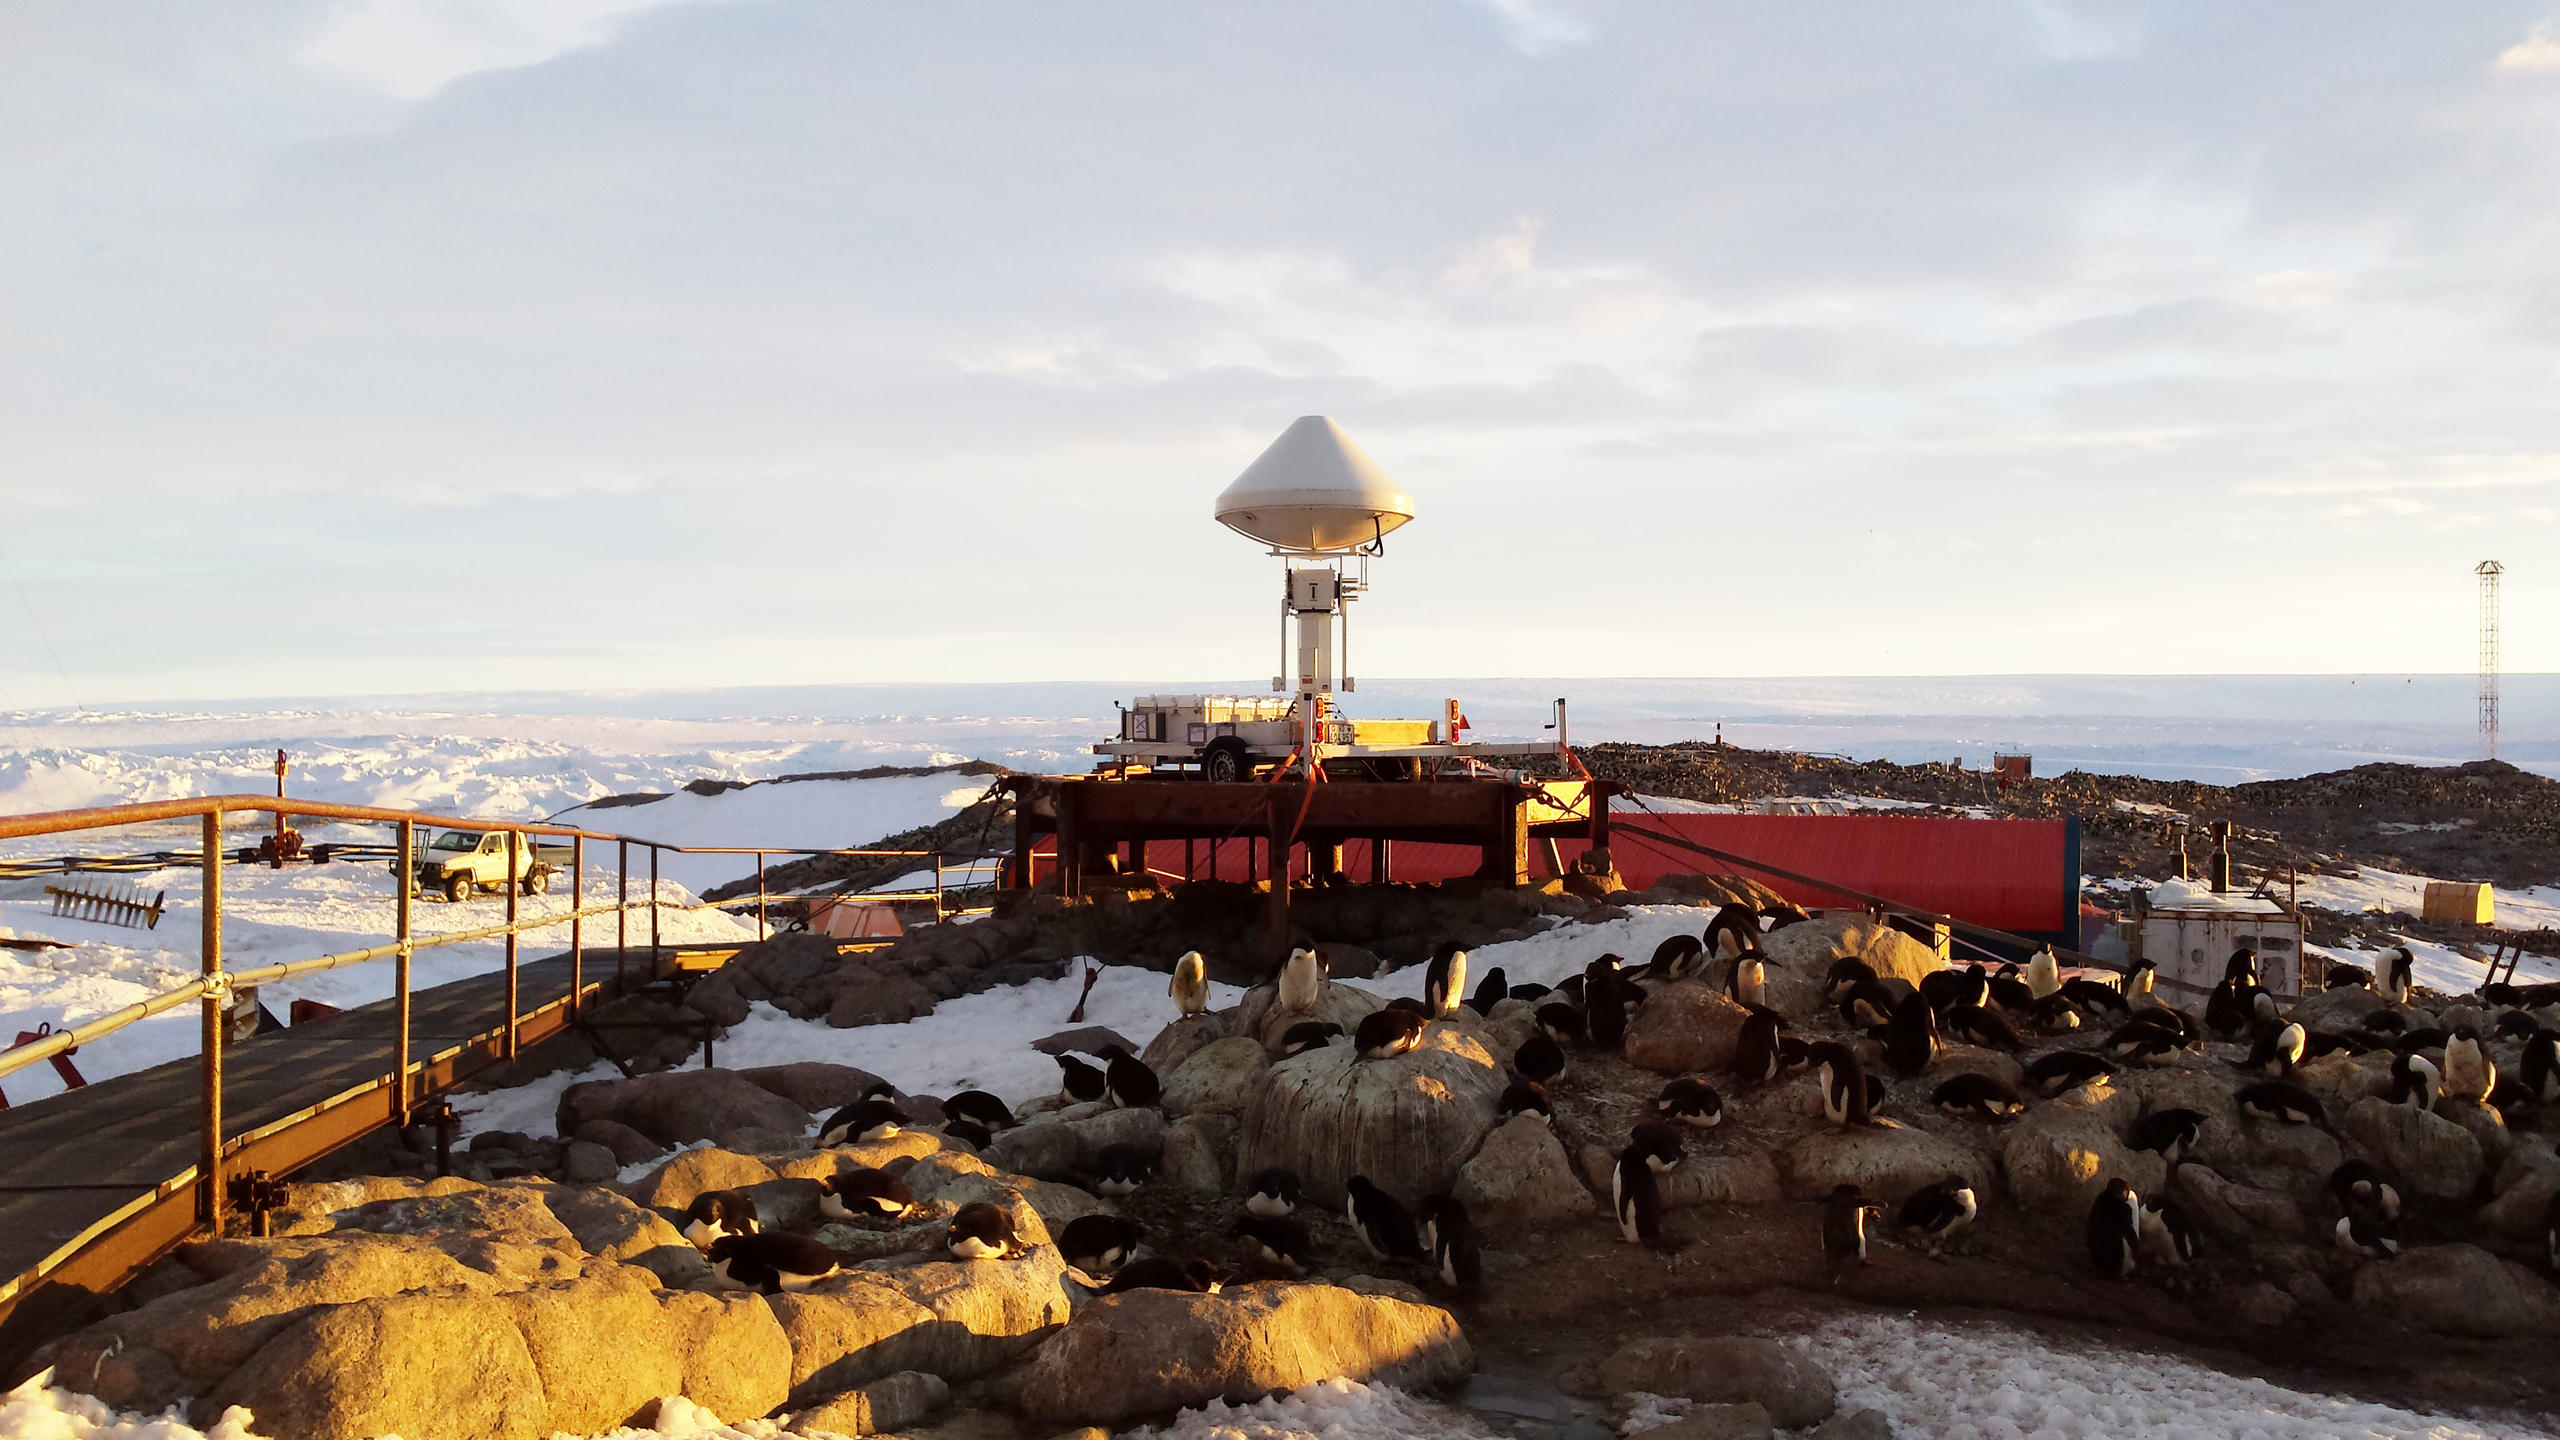 The Dumont d’Urville Antarctic research station